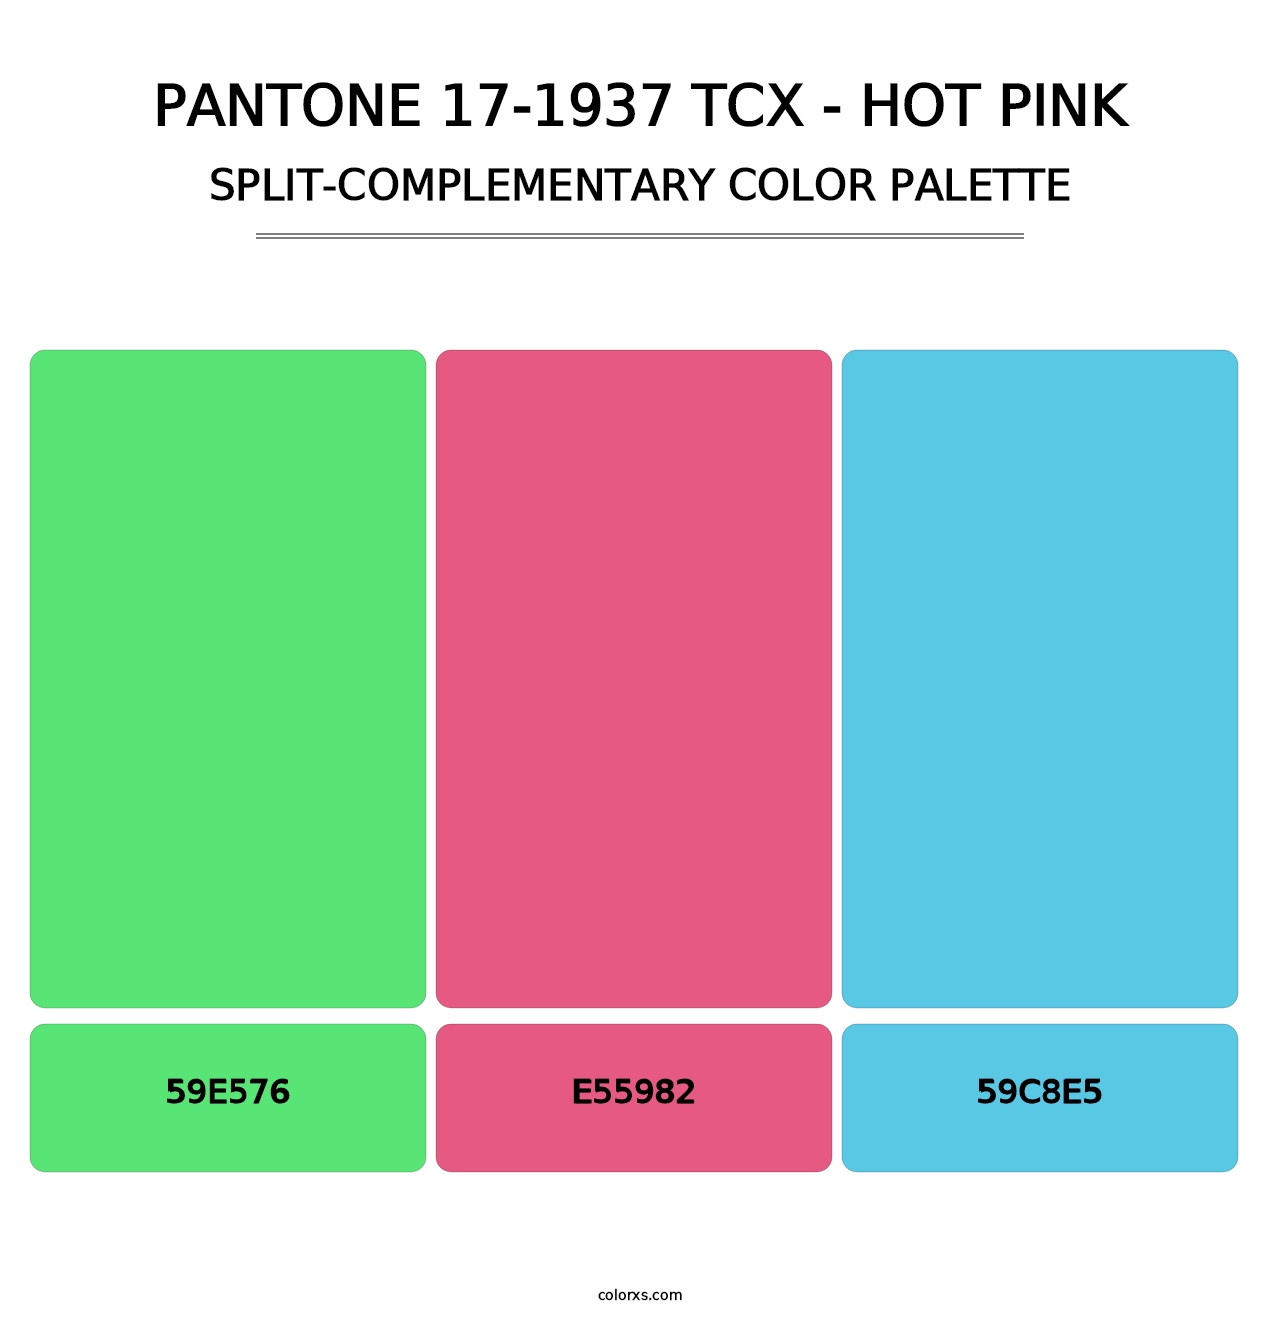 PANTONE 17-1937 TCX - Hot Pink - Split-Complementary Color Palette